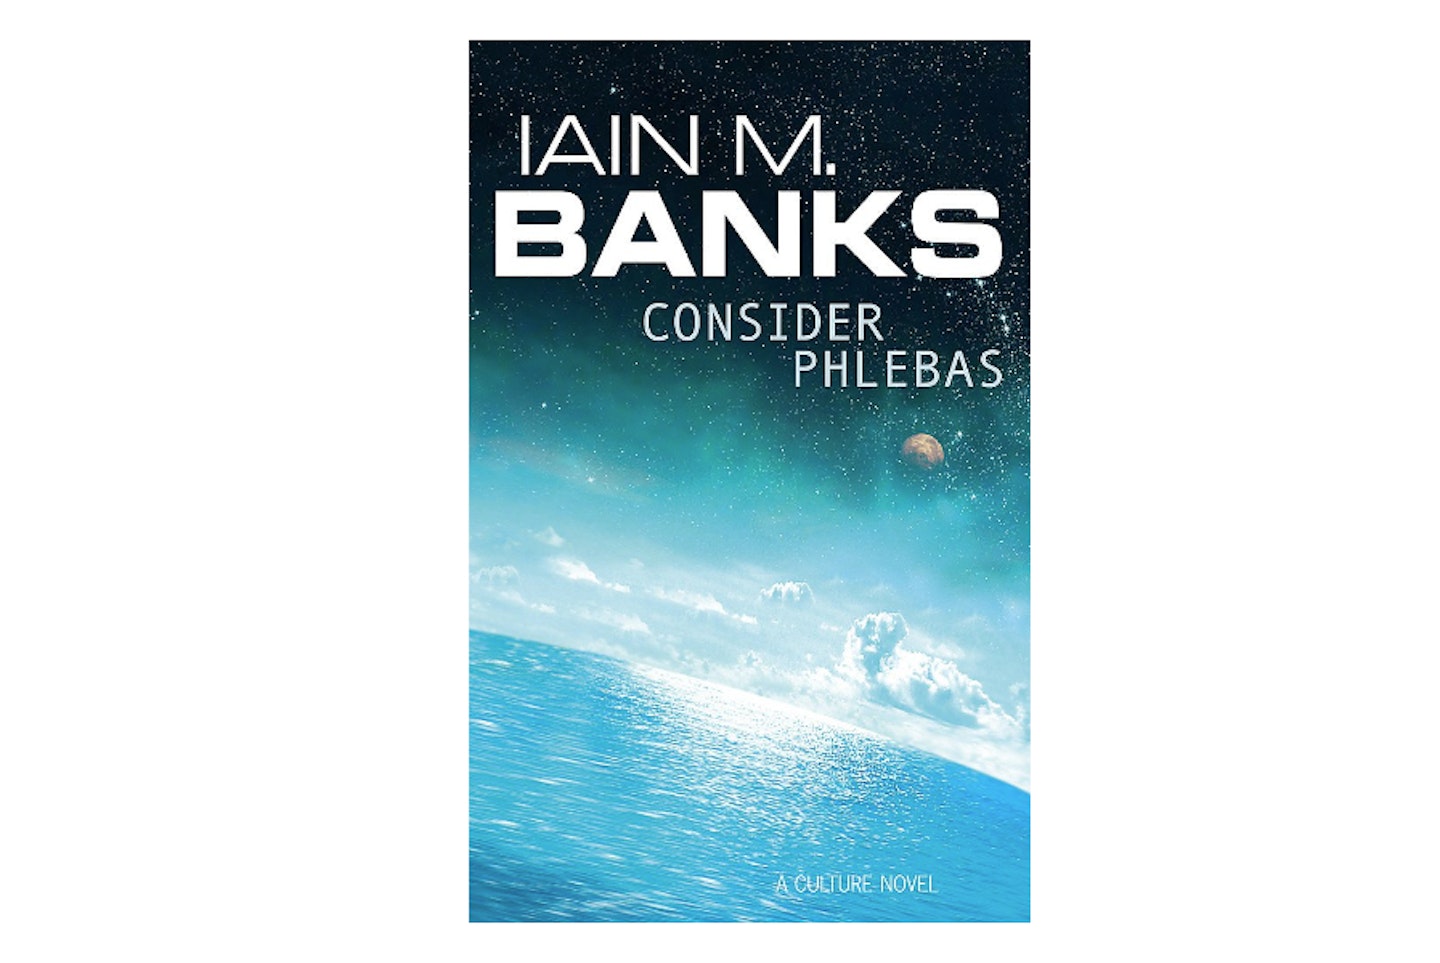 Consider Phlebas (A Culture Novel) by Iain M. Banks